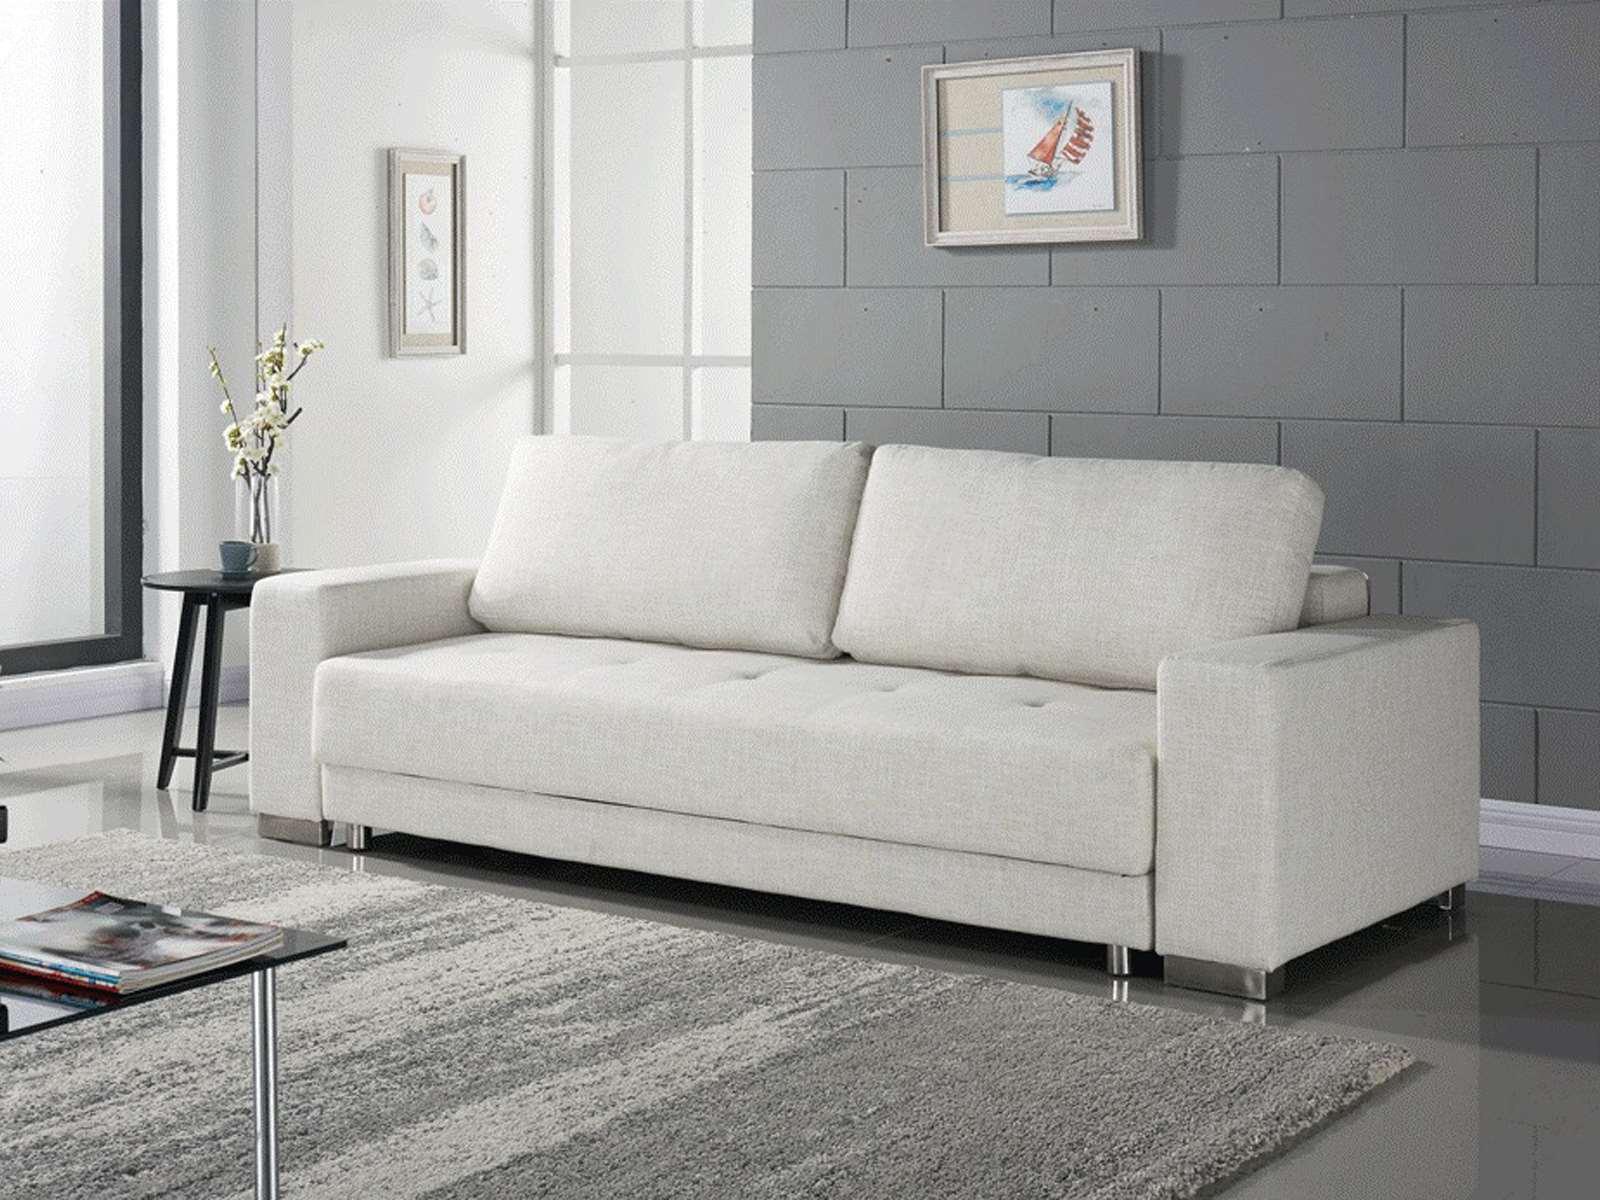 

    
Casabianca CLOE Contemporary Beige Fabric Stainless Steel Legs Sofa Bed
